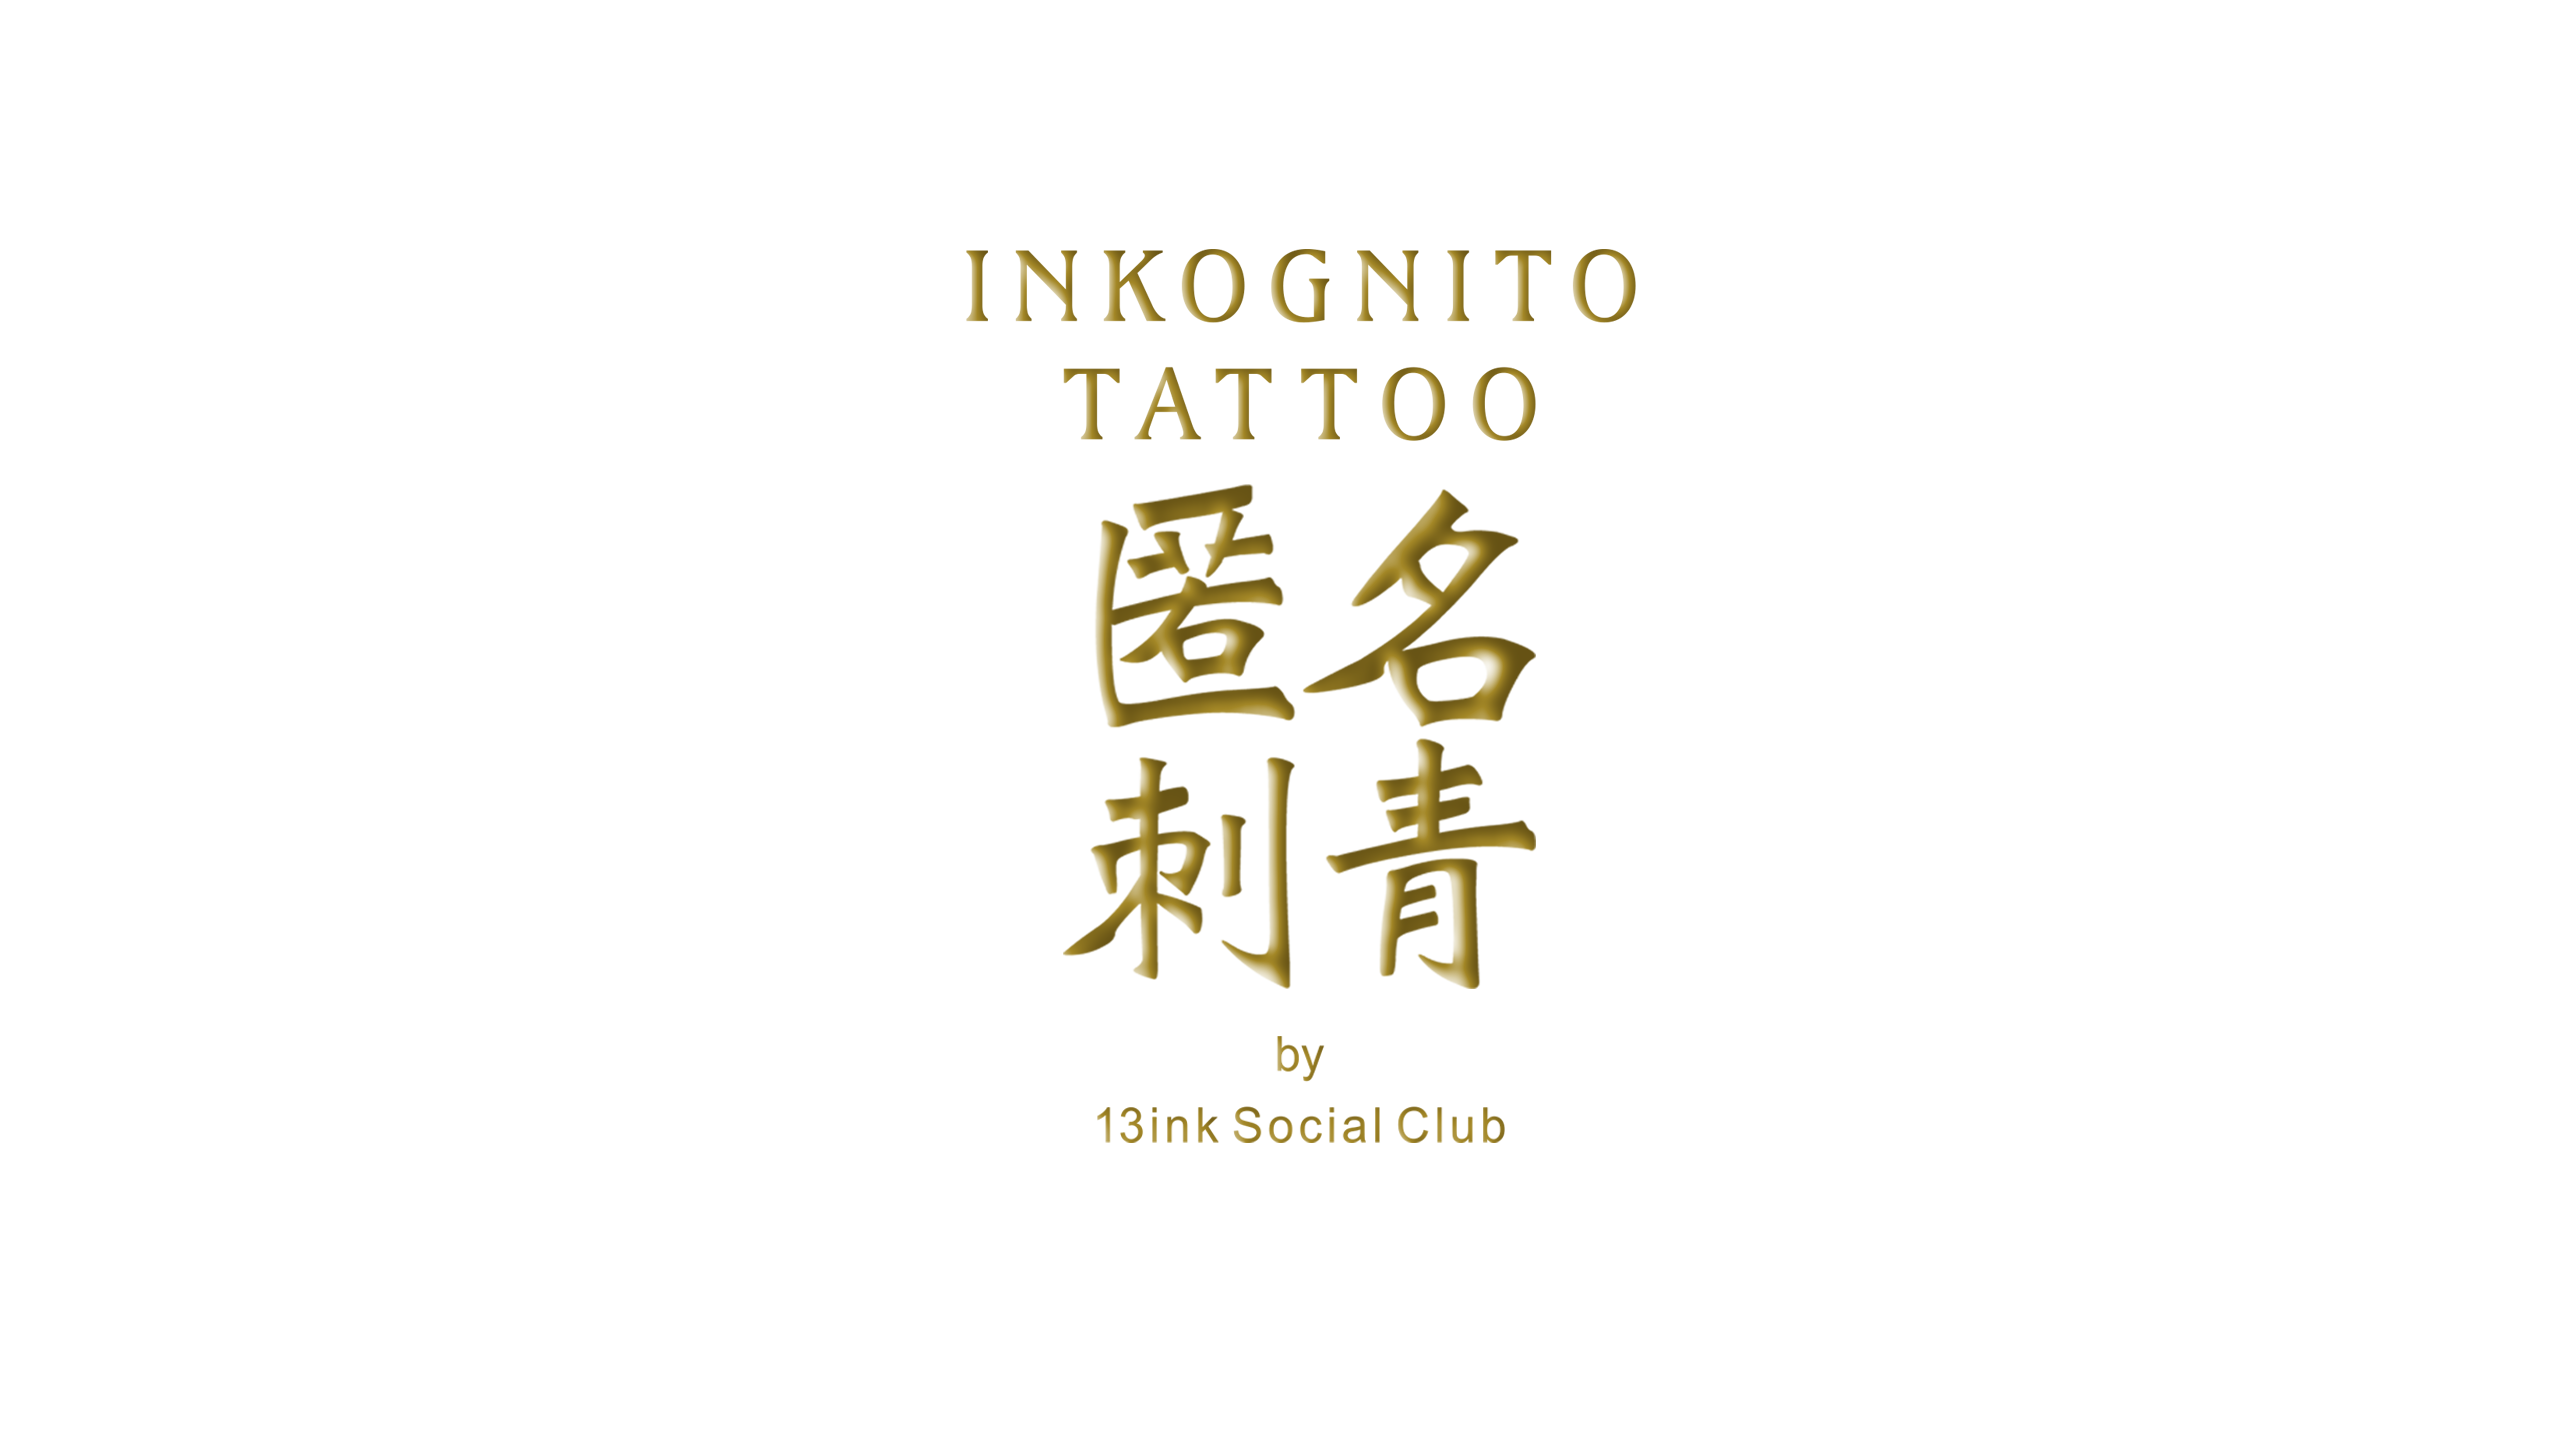 Inkognito Tattoo 匿名刺青